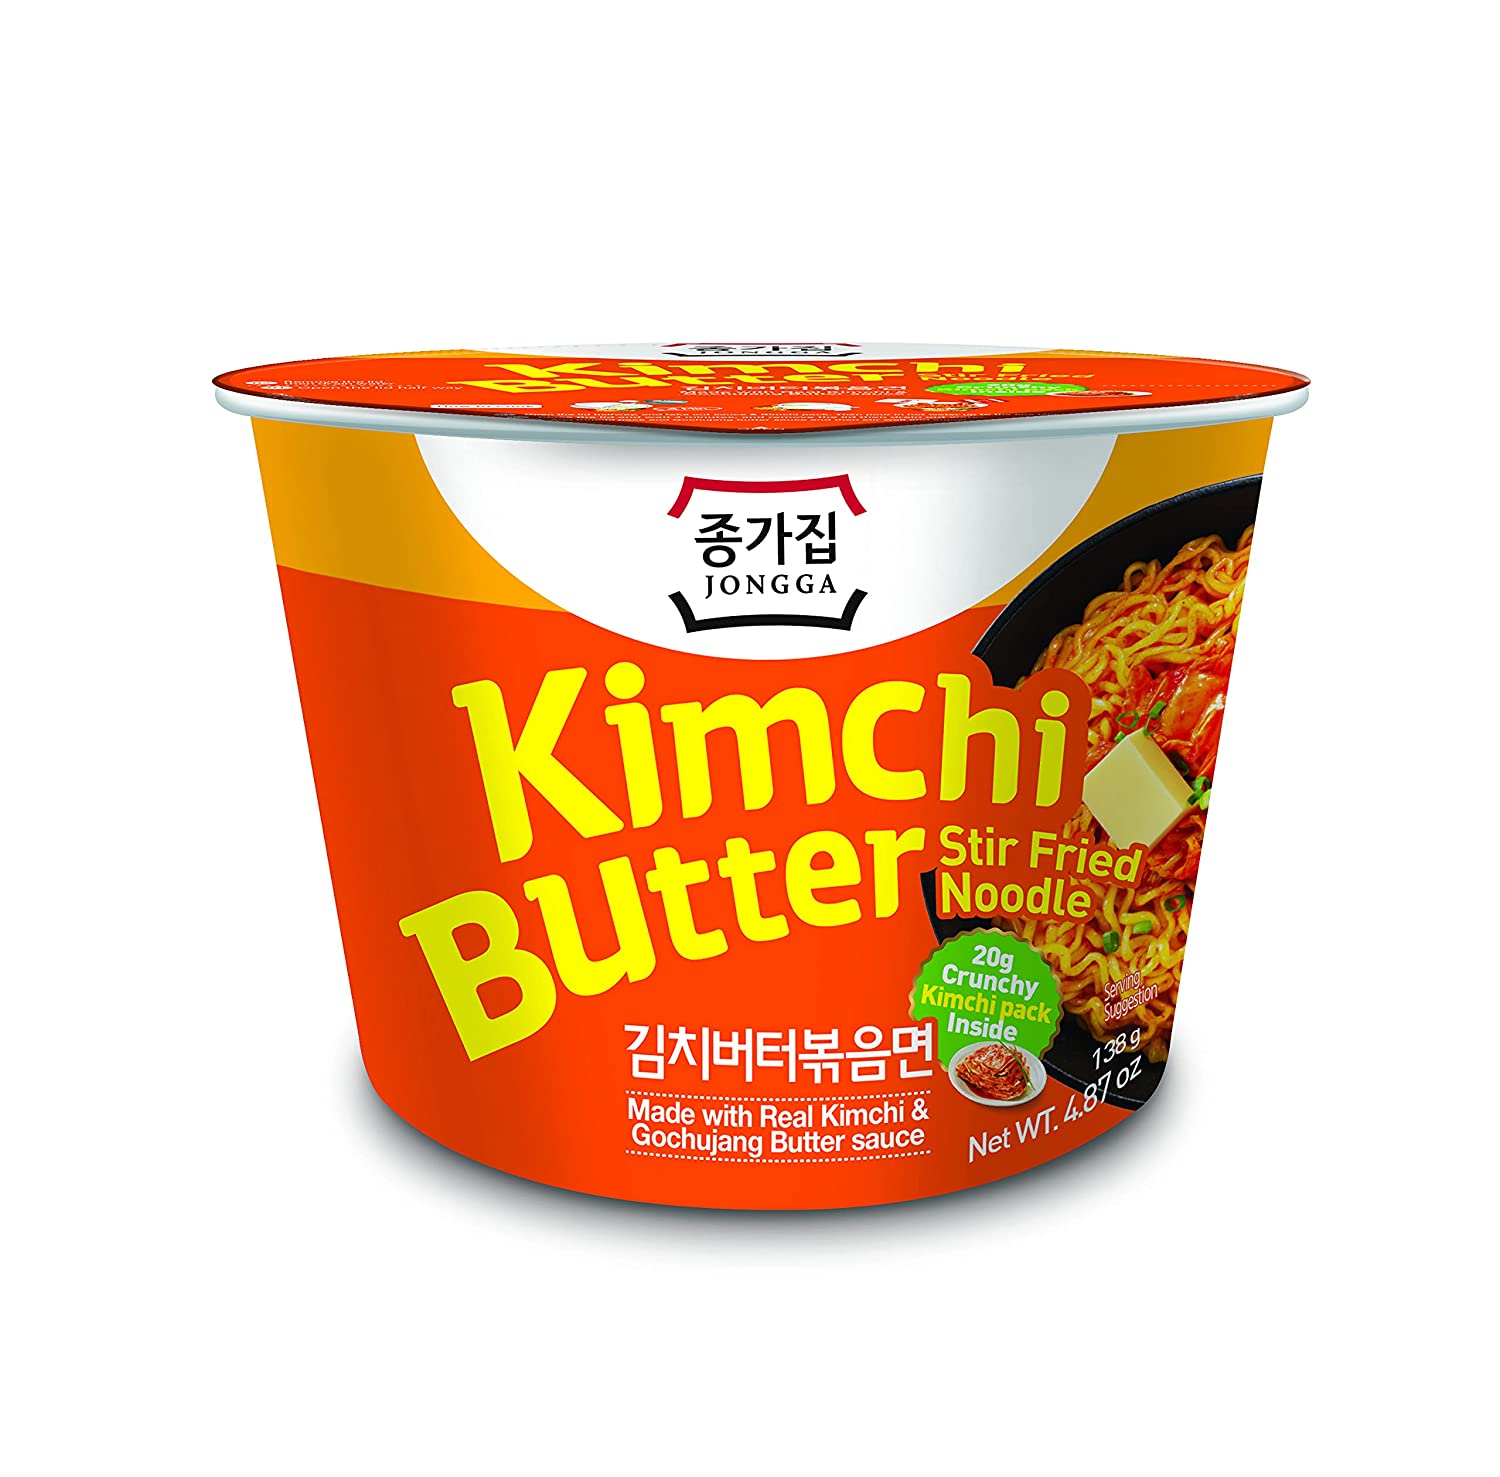 Jongga Kimchi Butter Stir Fried Noodles,  4.87 oz (138g)